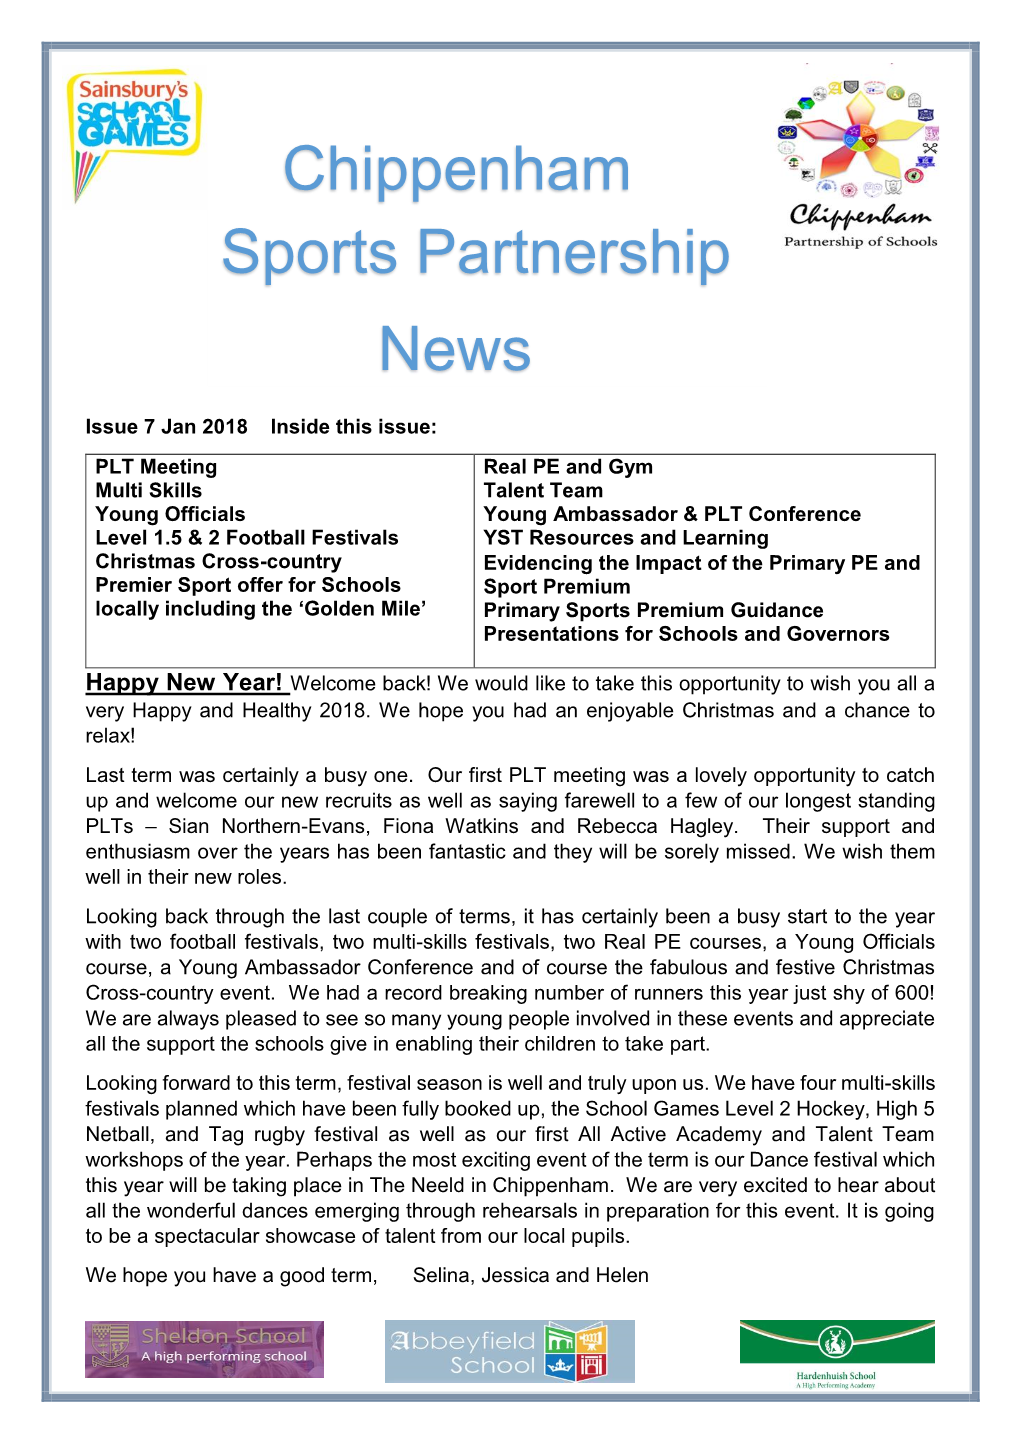 Chippenham Sports Partnership News